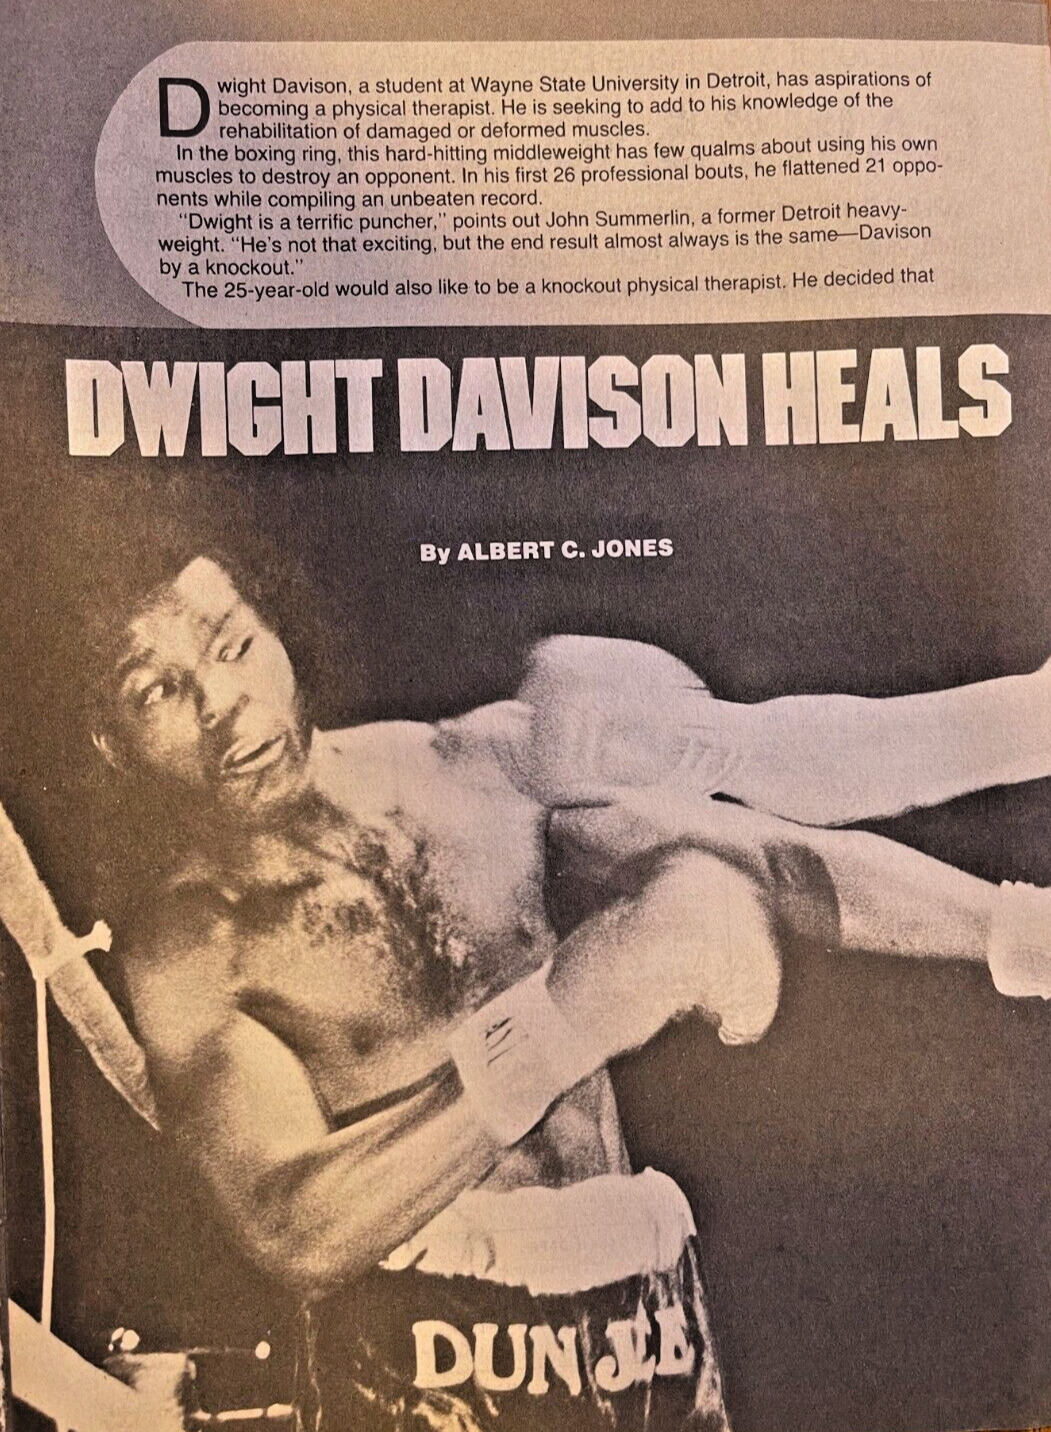 1980 Boxer Dwight Davison illustrated